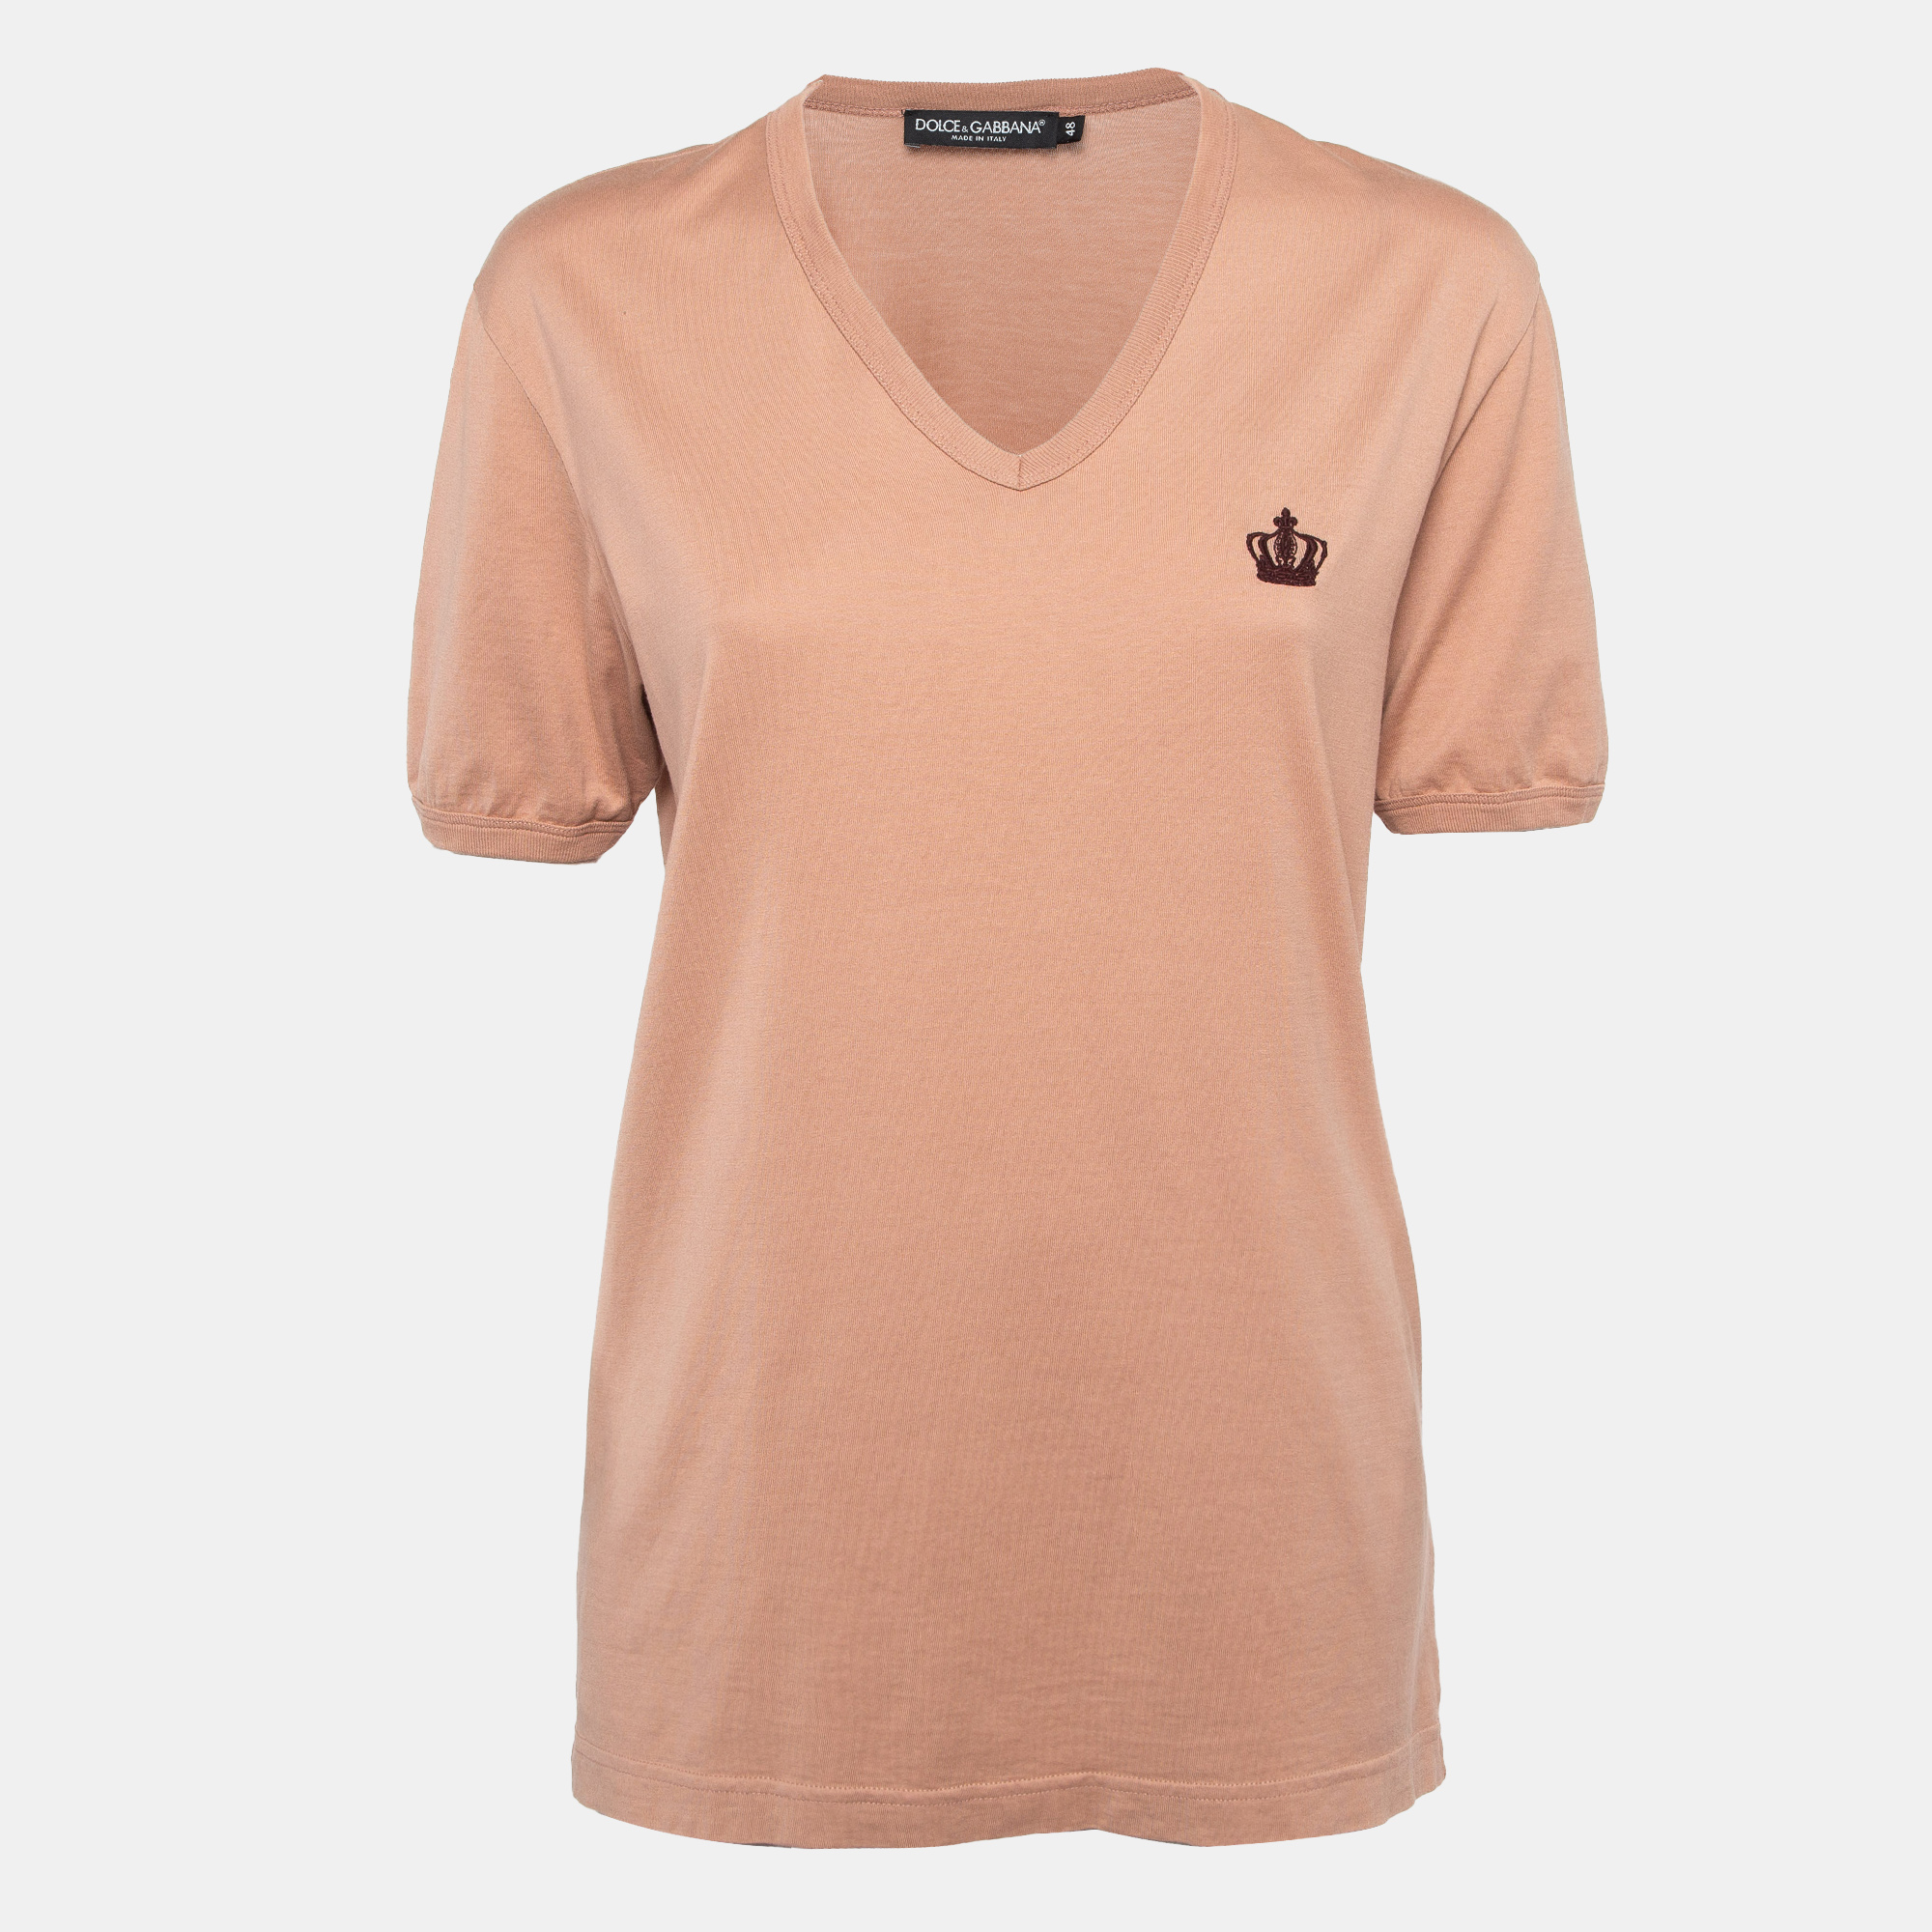 Dolce & gabbana orange cotton knit v-neck t-shirt l